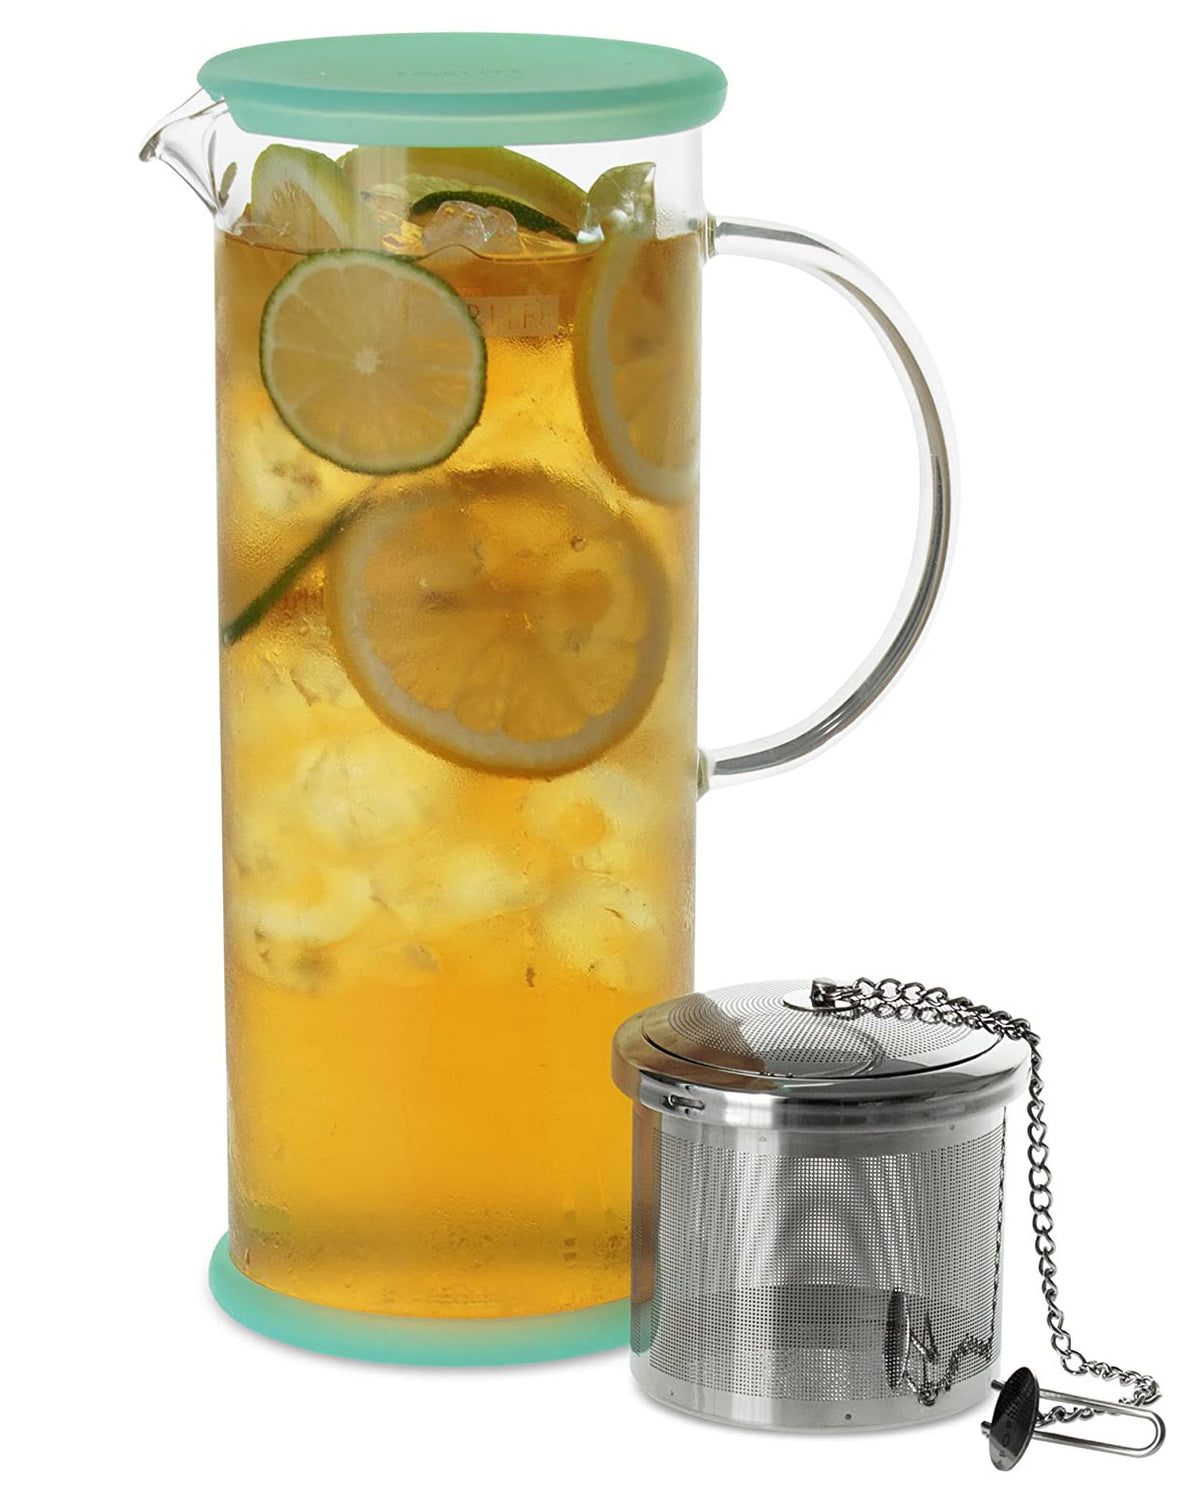 FORLIFE Lucent Glass Iced Tea Jug: Mint (48 oz.)